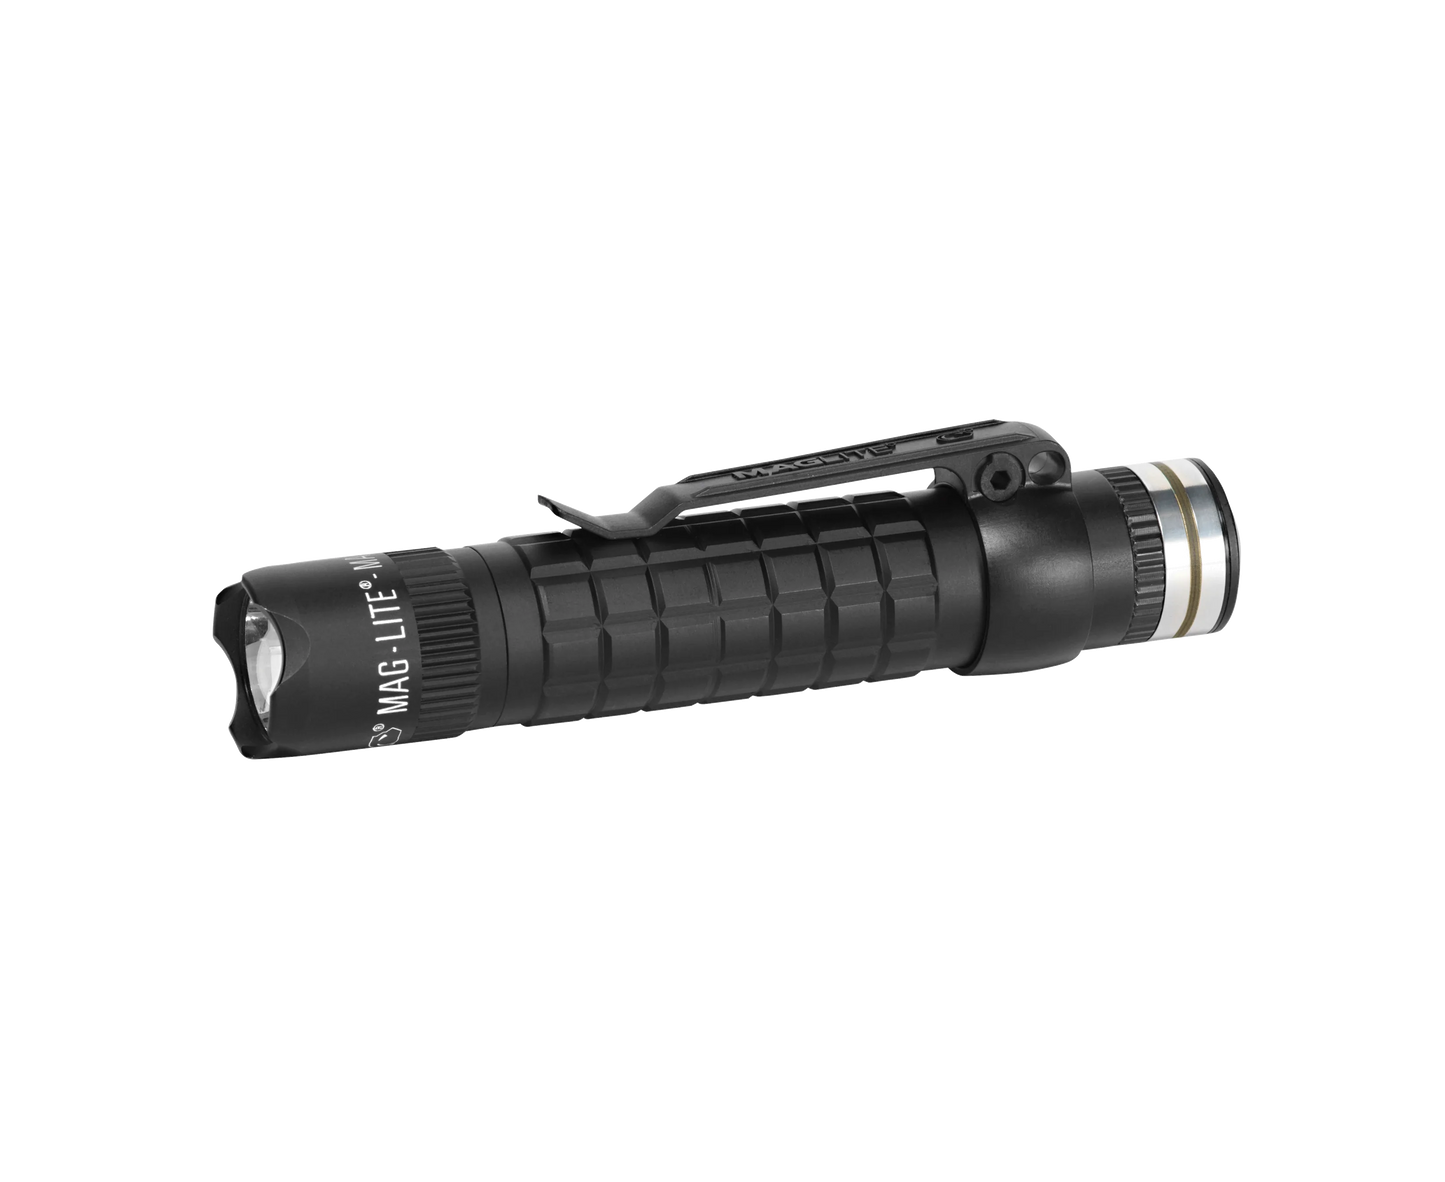 MAG-TAC LED Rechargeable Flashlight System Crowned Bezel